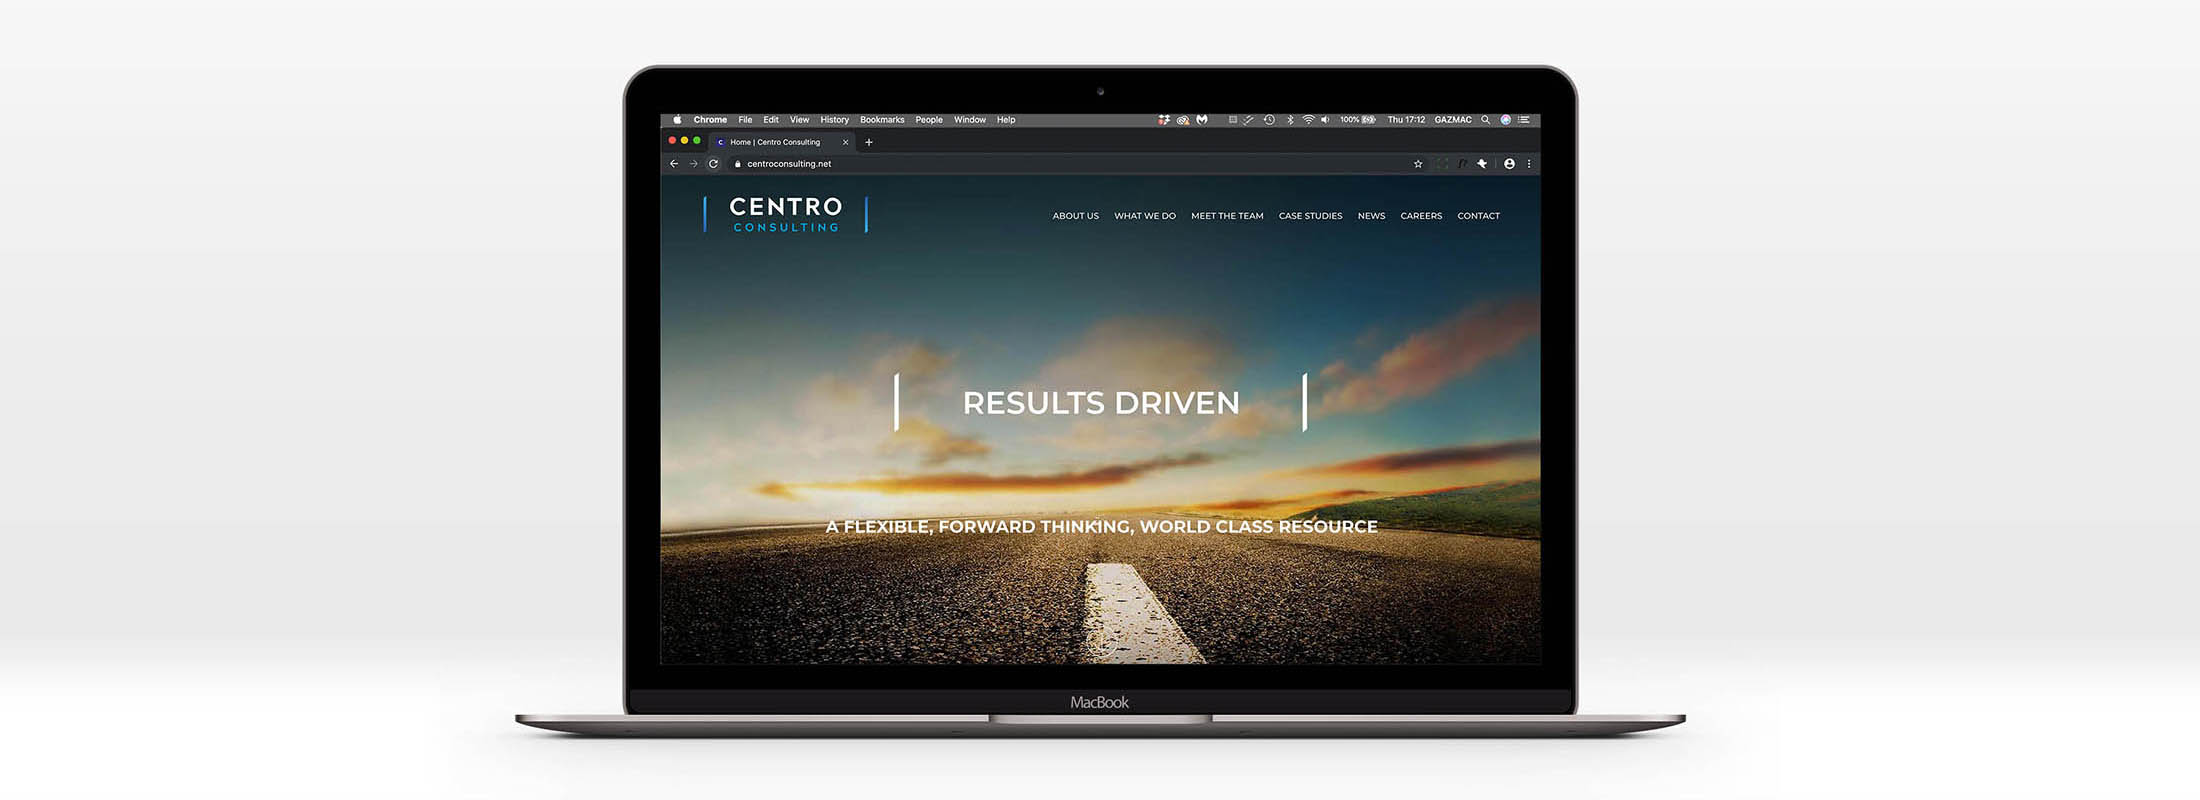 Centro consulting website identity rebrand